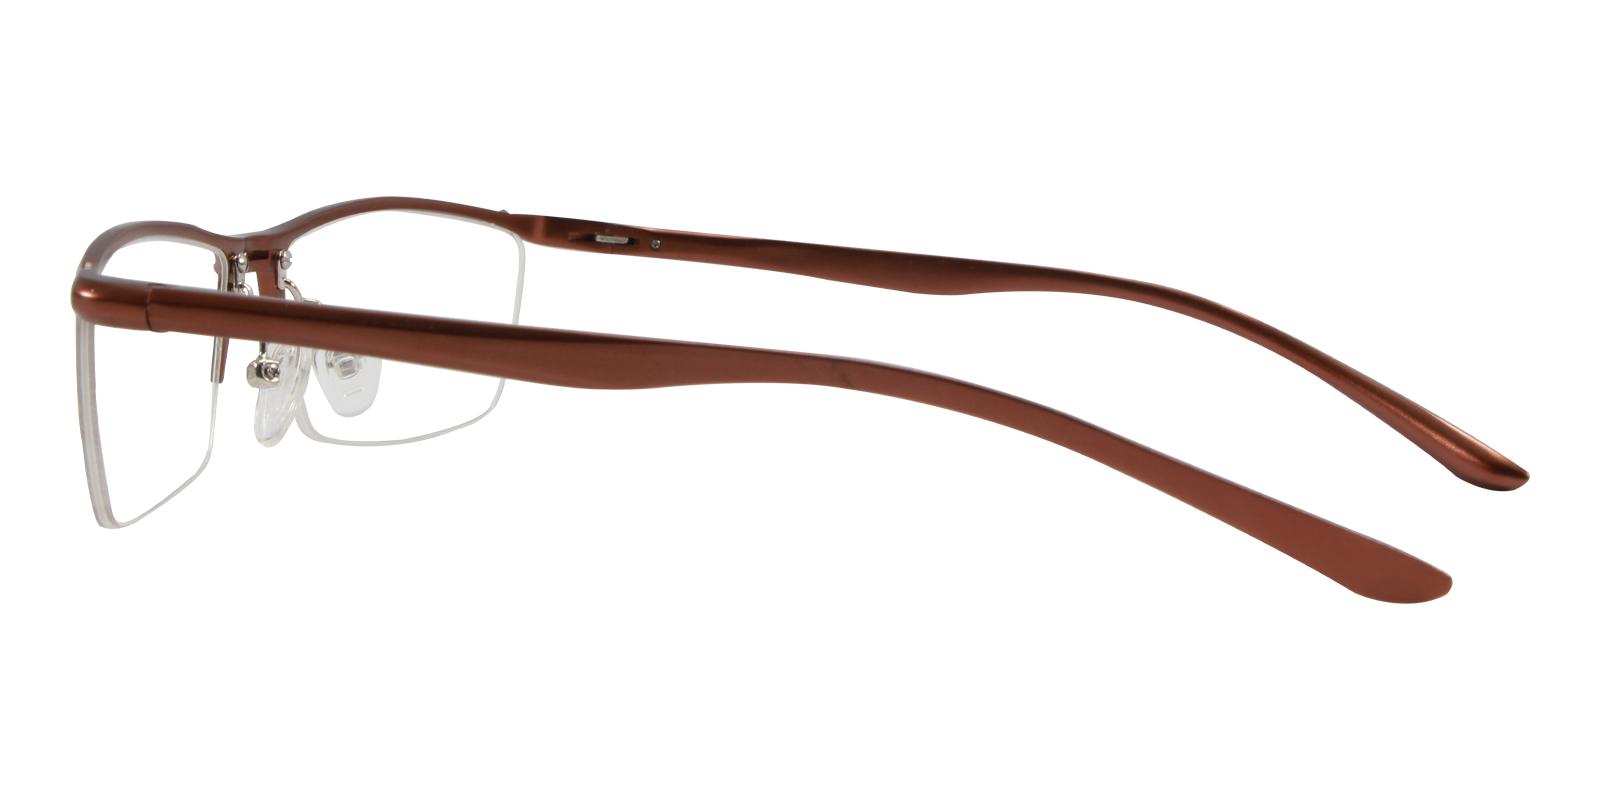 Stardust Brown Metal NosePads , SportsGlasses , SpringHinges Frames from ABBE Glasses